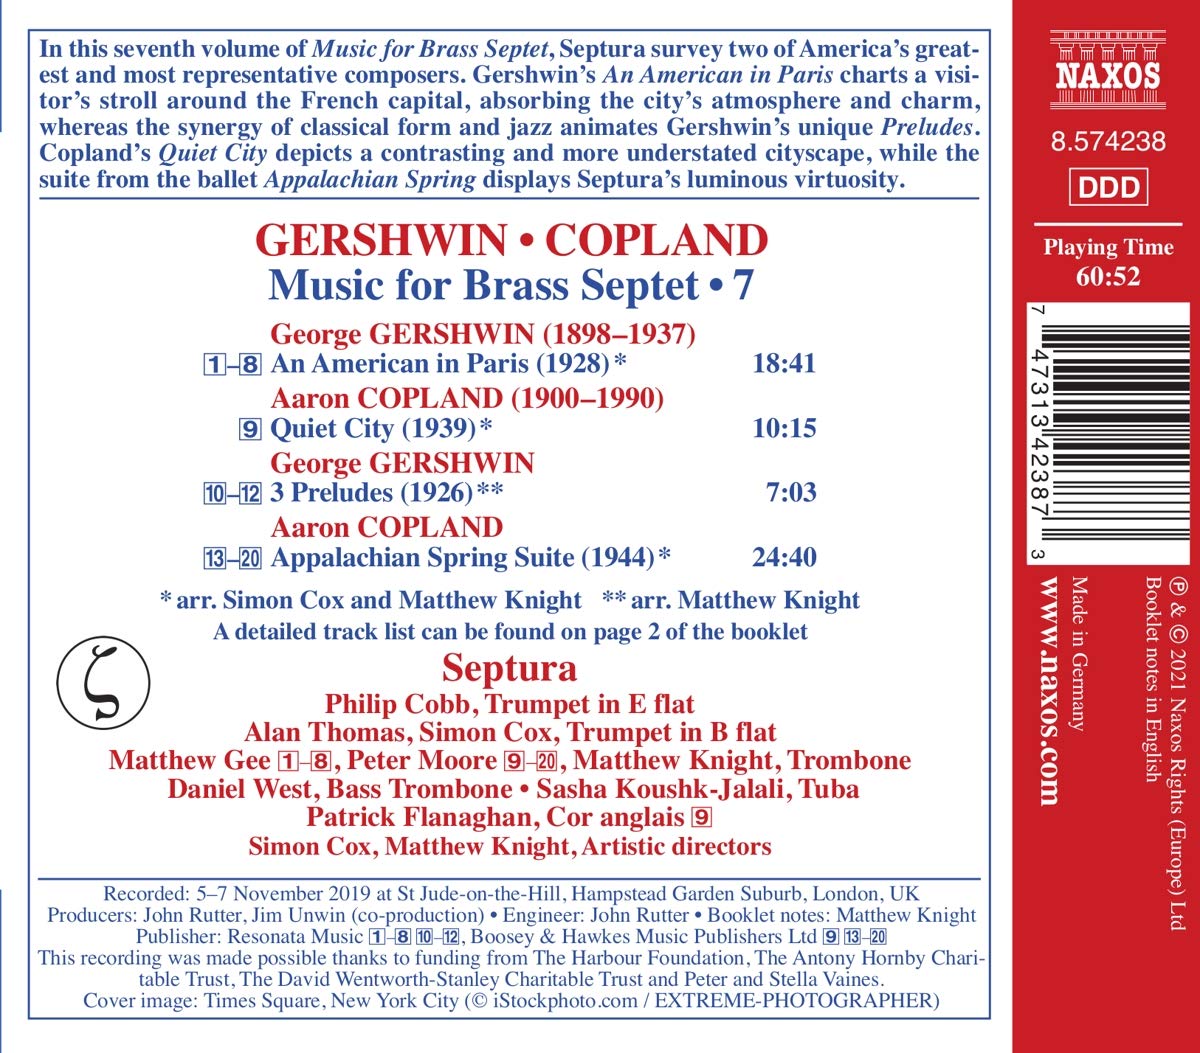 Septura 셉투라 - 금관 7중주를 위한 음악 7집: 거쉰 / 코플란드 (Music for Brass Septet Vol.7 - Gershwin / Copland)  